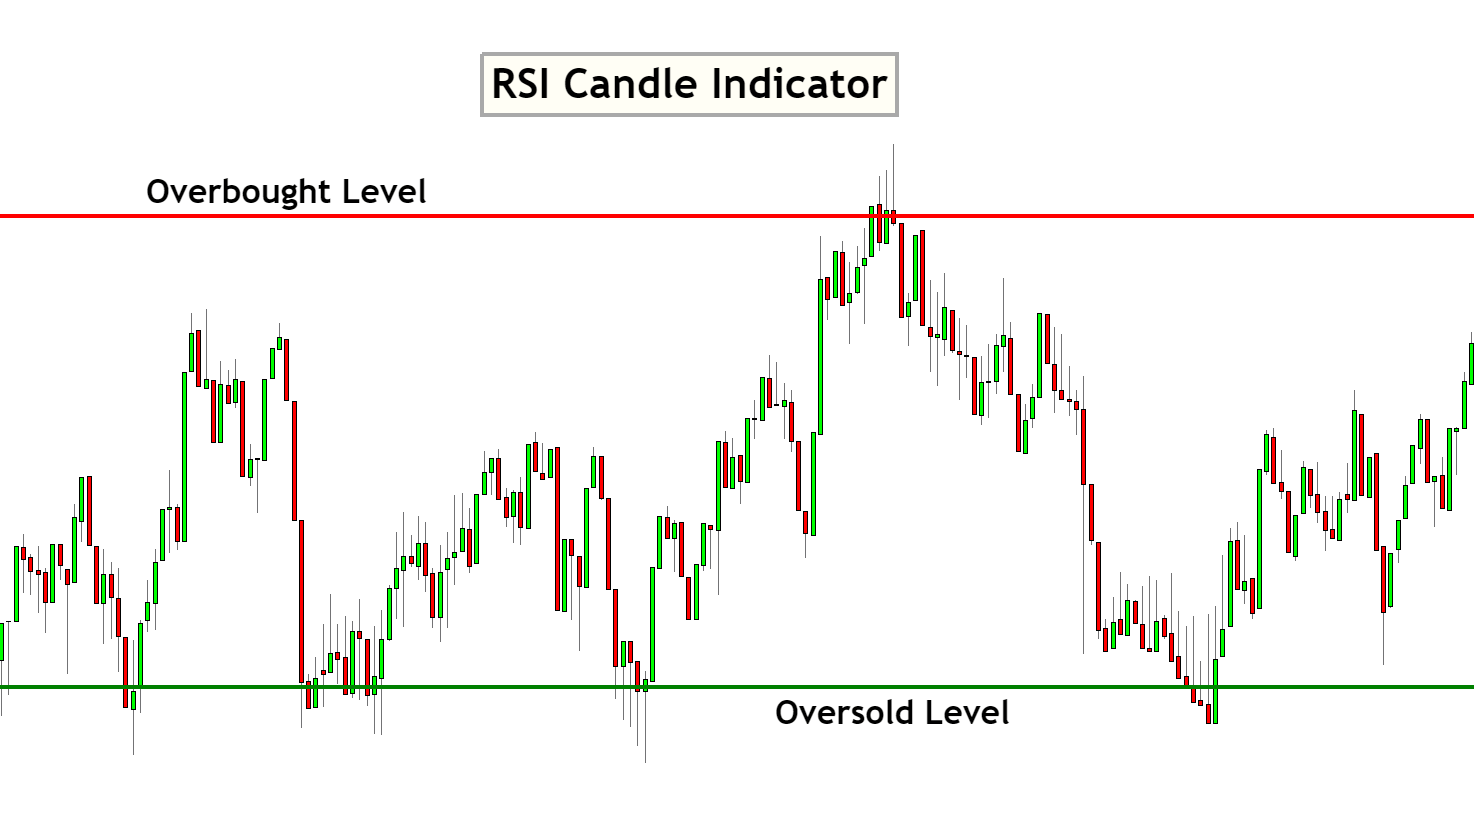 RSI candle indicator